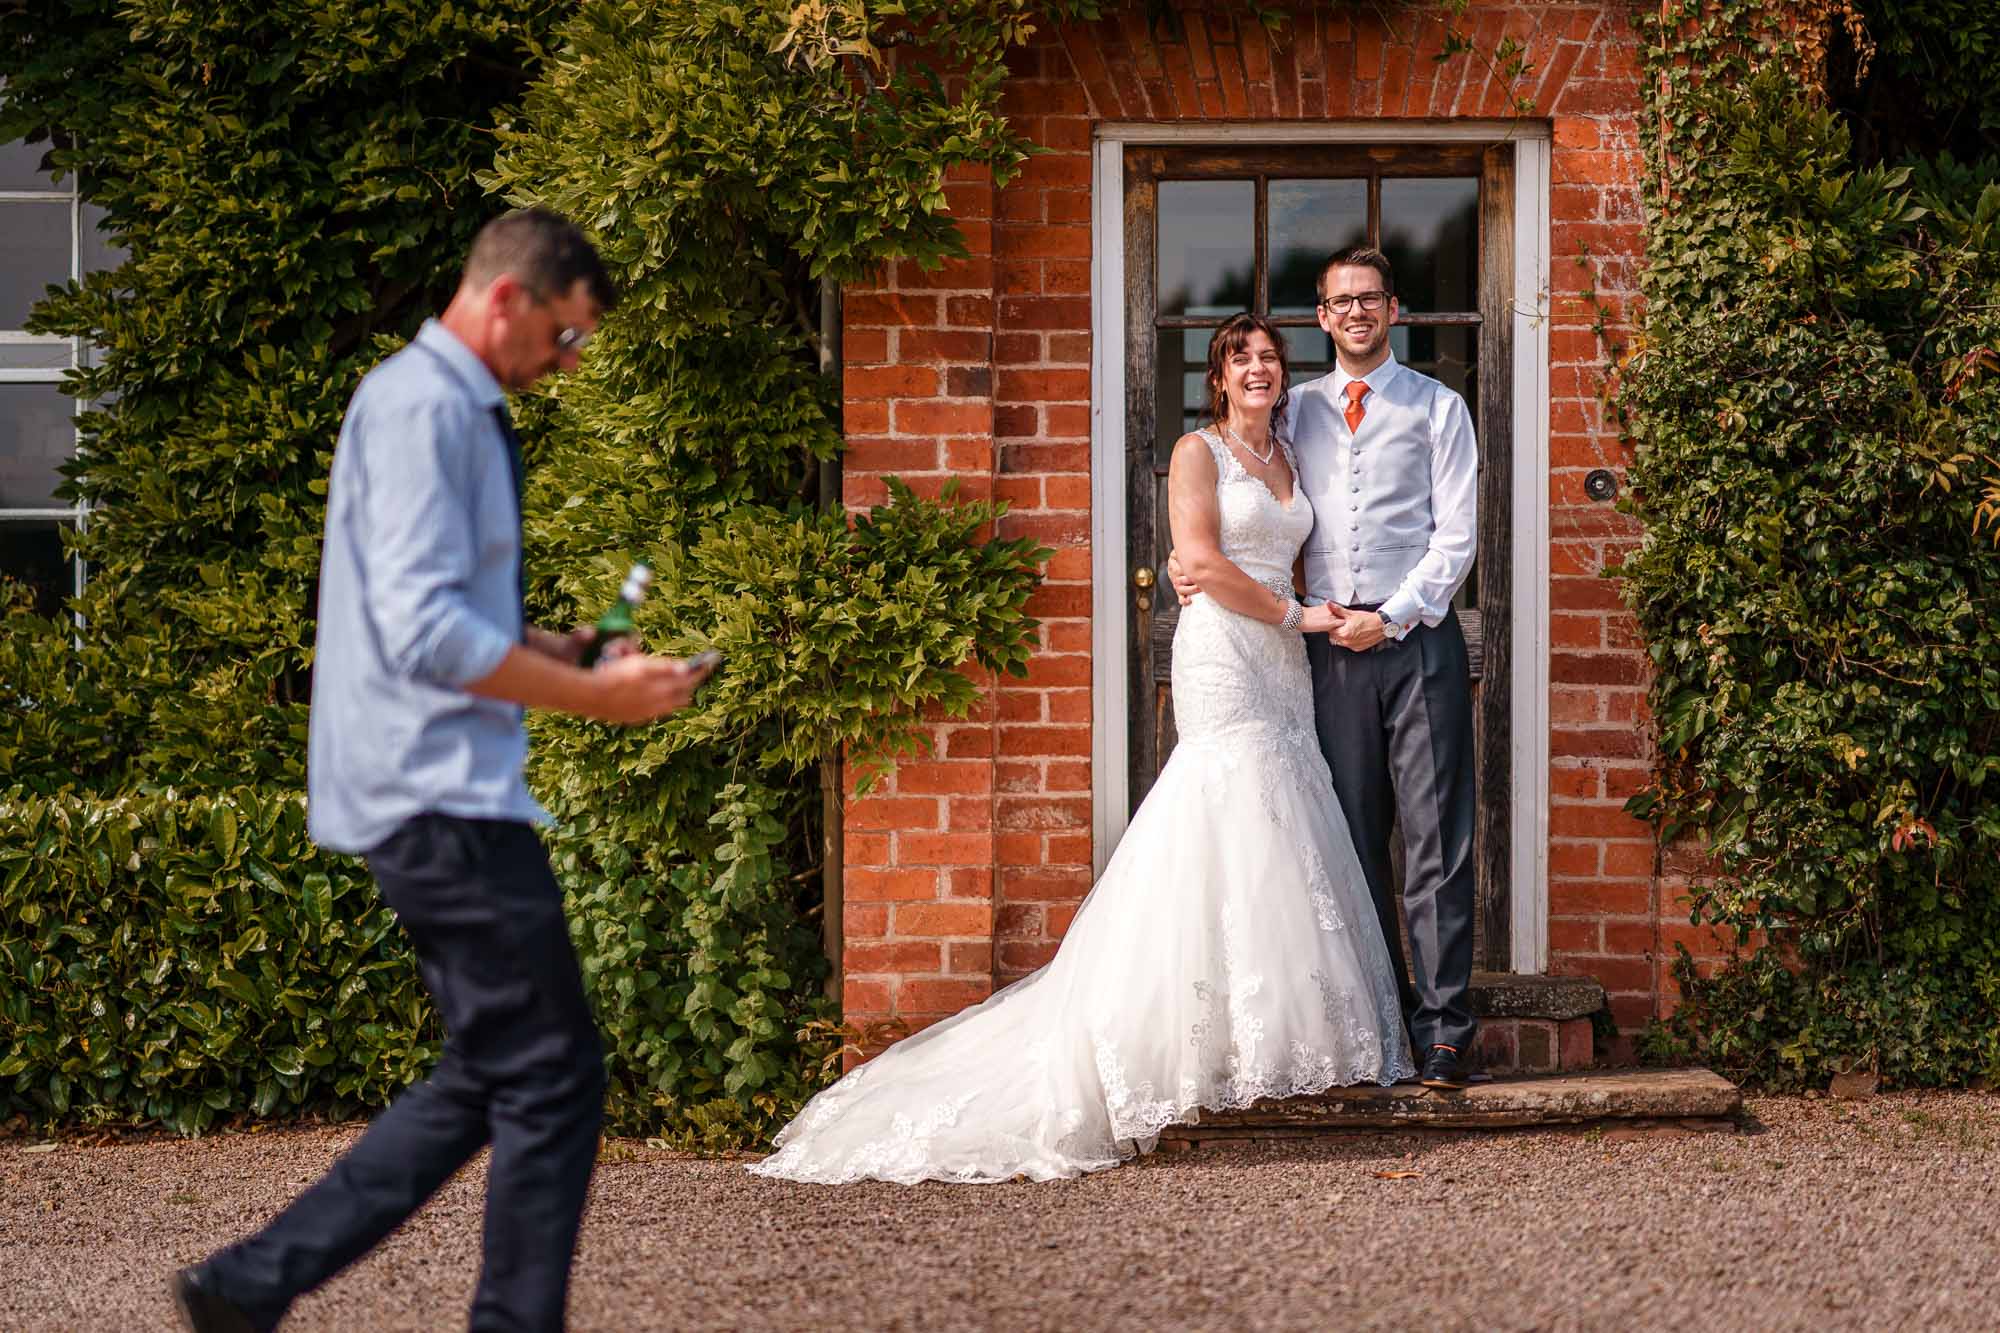 Herefordshire wedding photographer, Wedding Photographer in Herefordshire, West Midlands Wedding Photographer, Best Wedding photography in the west midlands, David Liebst Photography